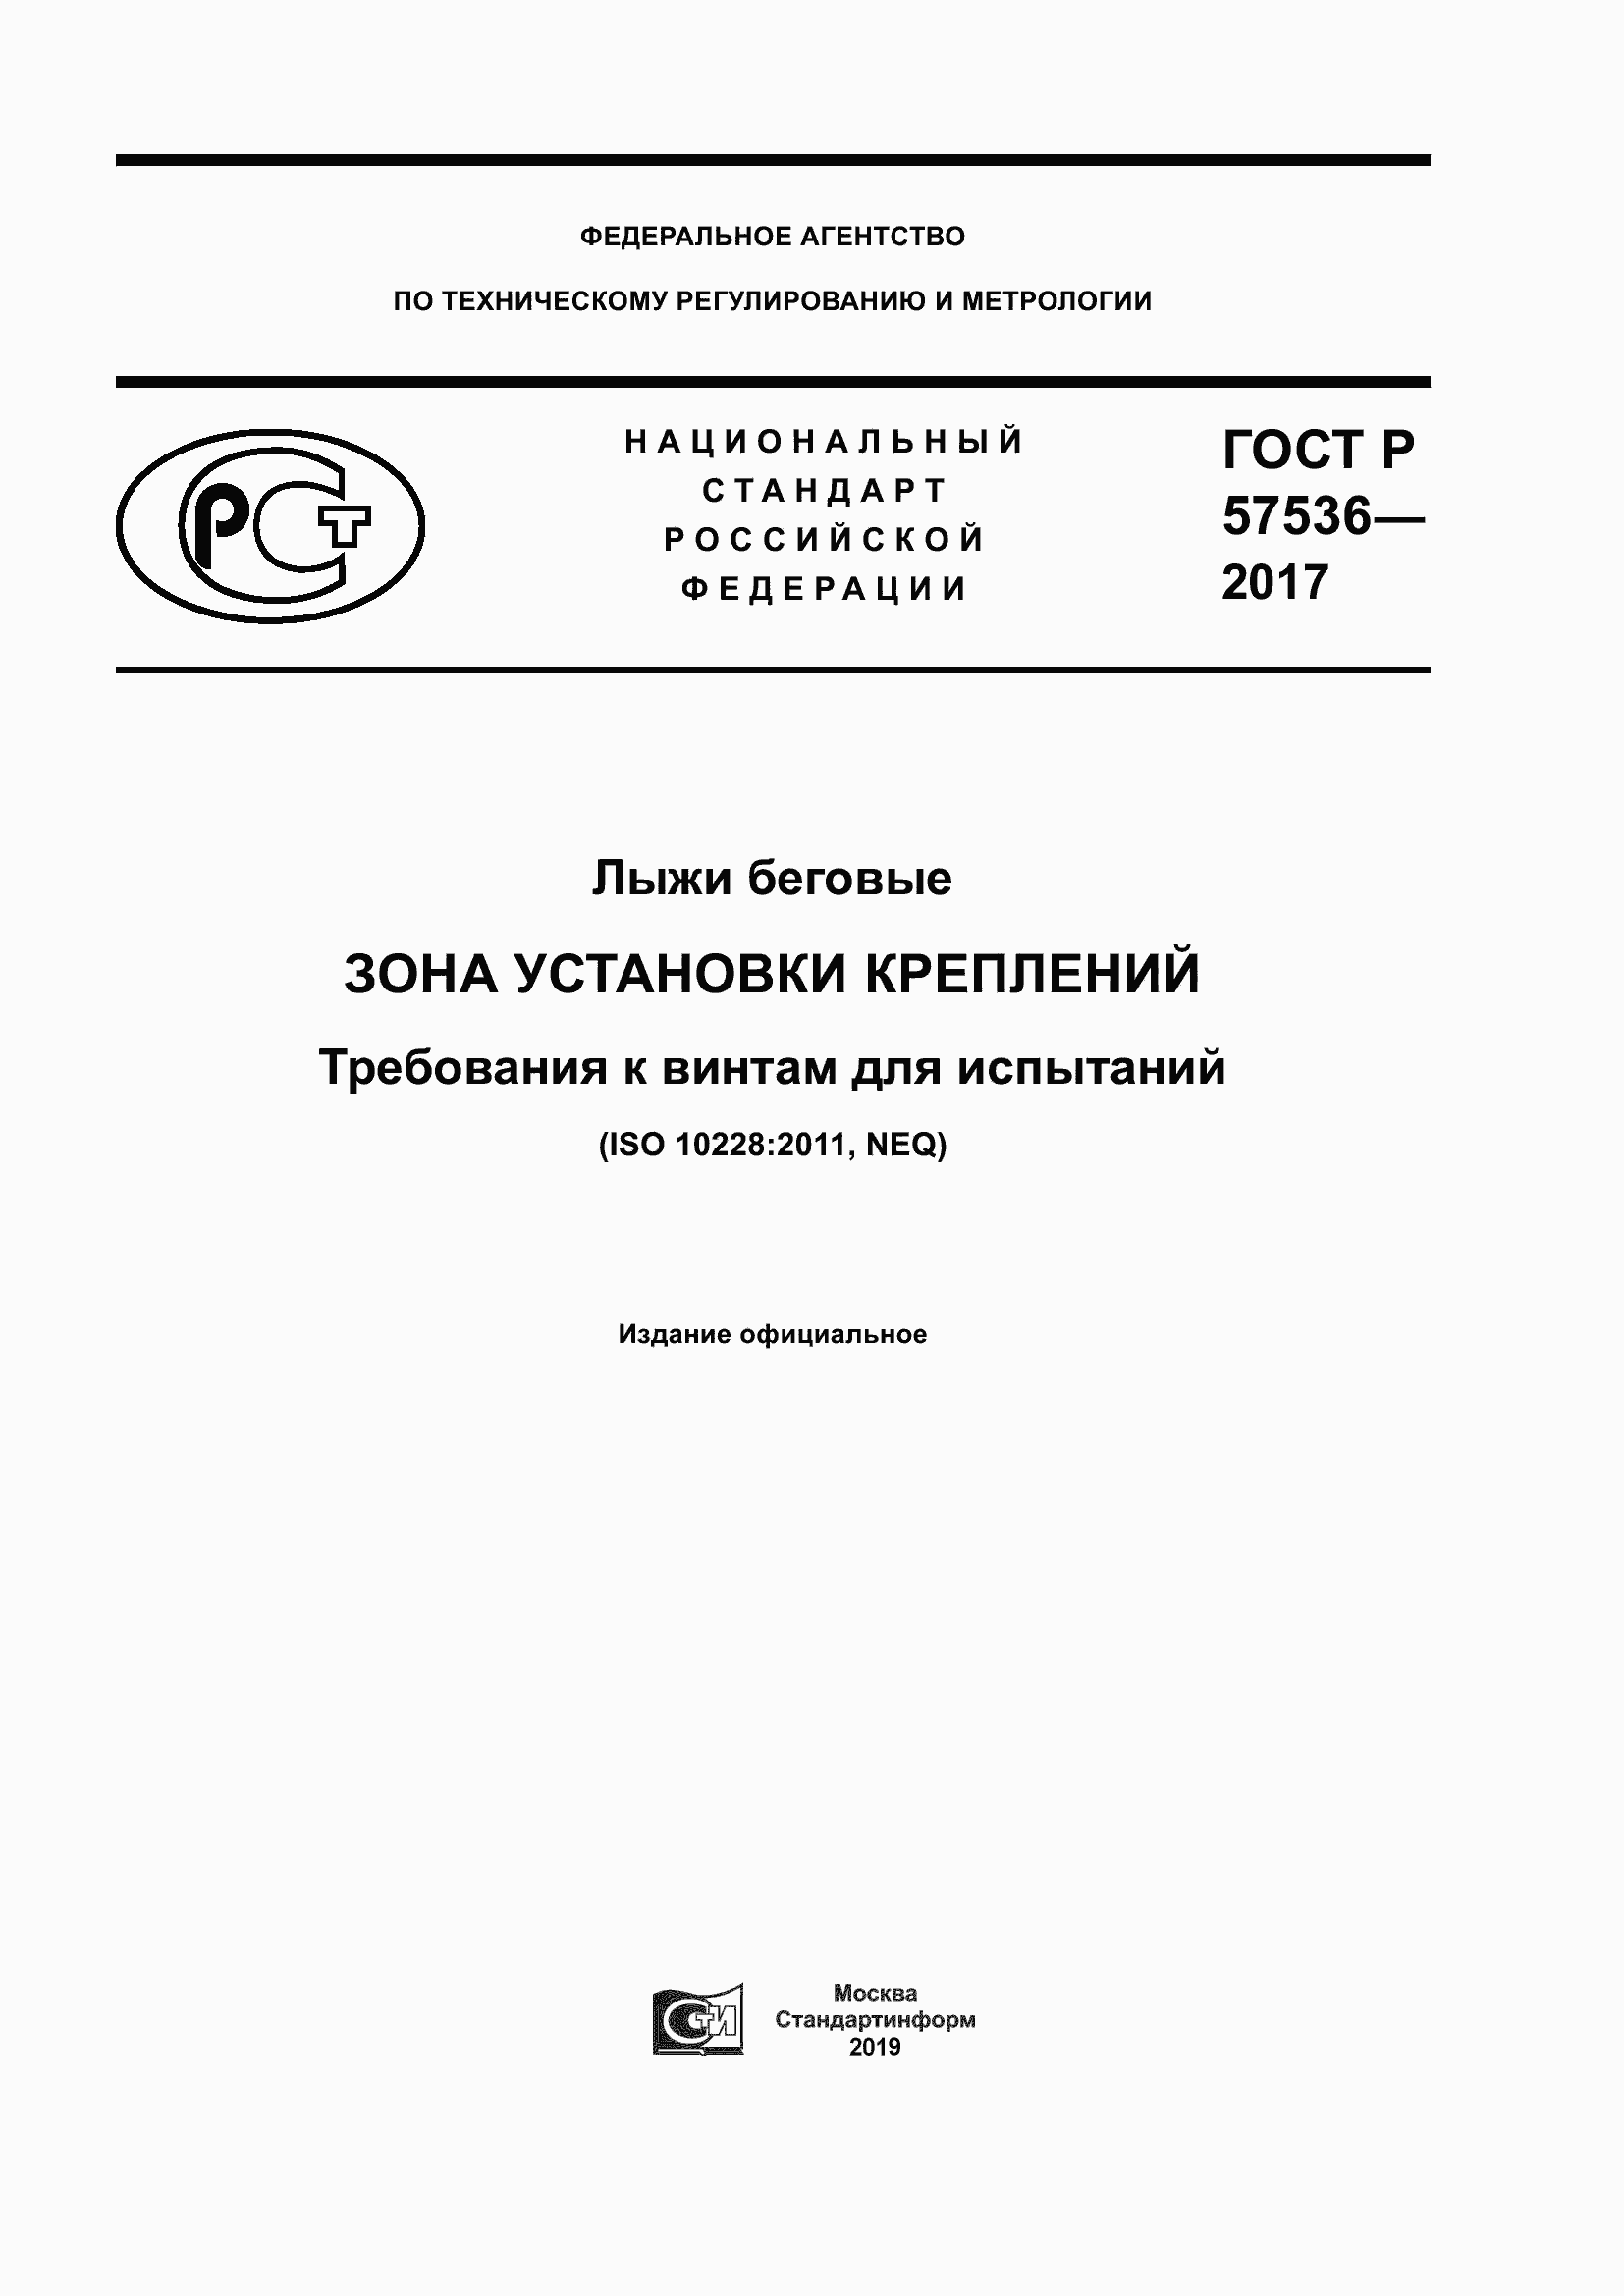 ГОСТ Р 57536-2017. Страница 1